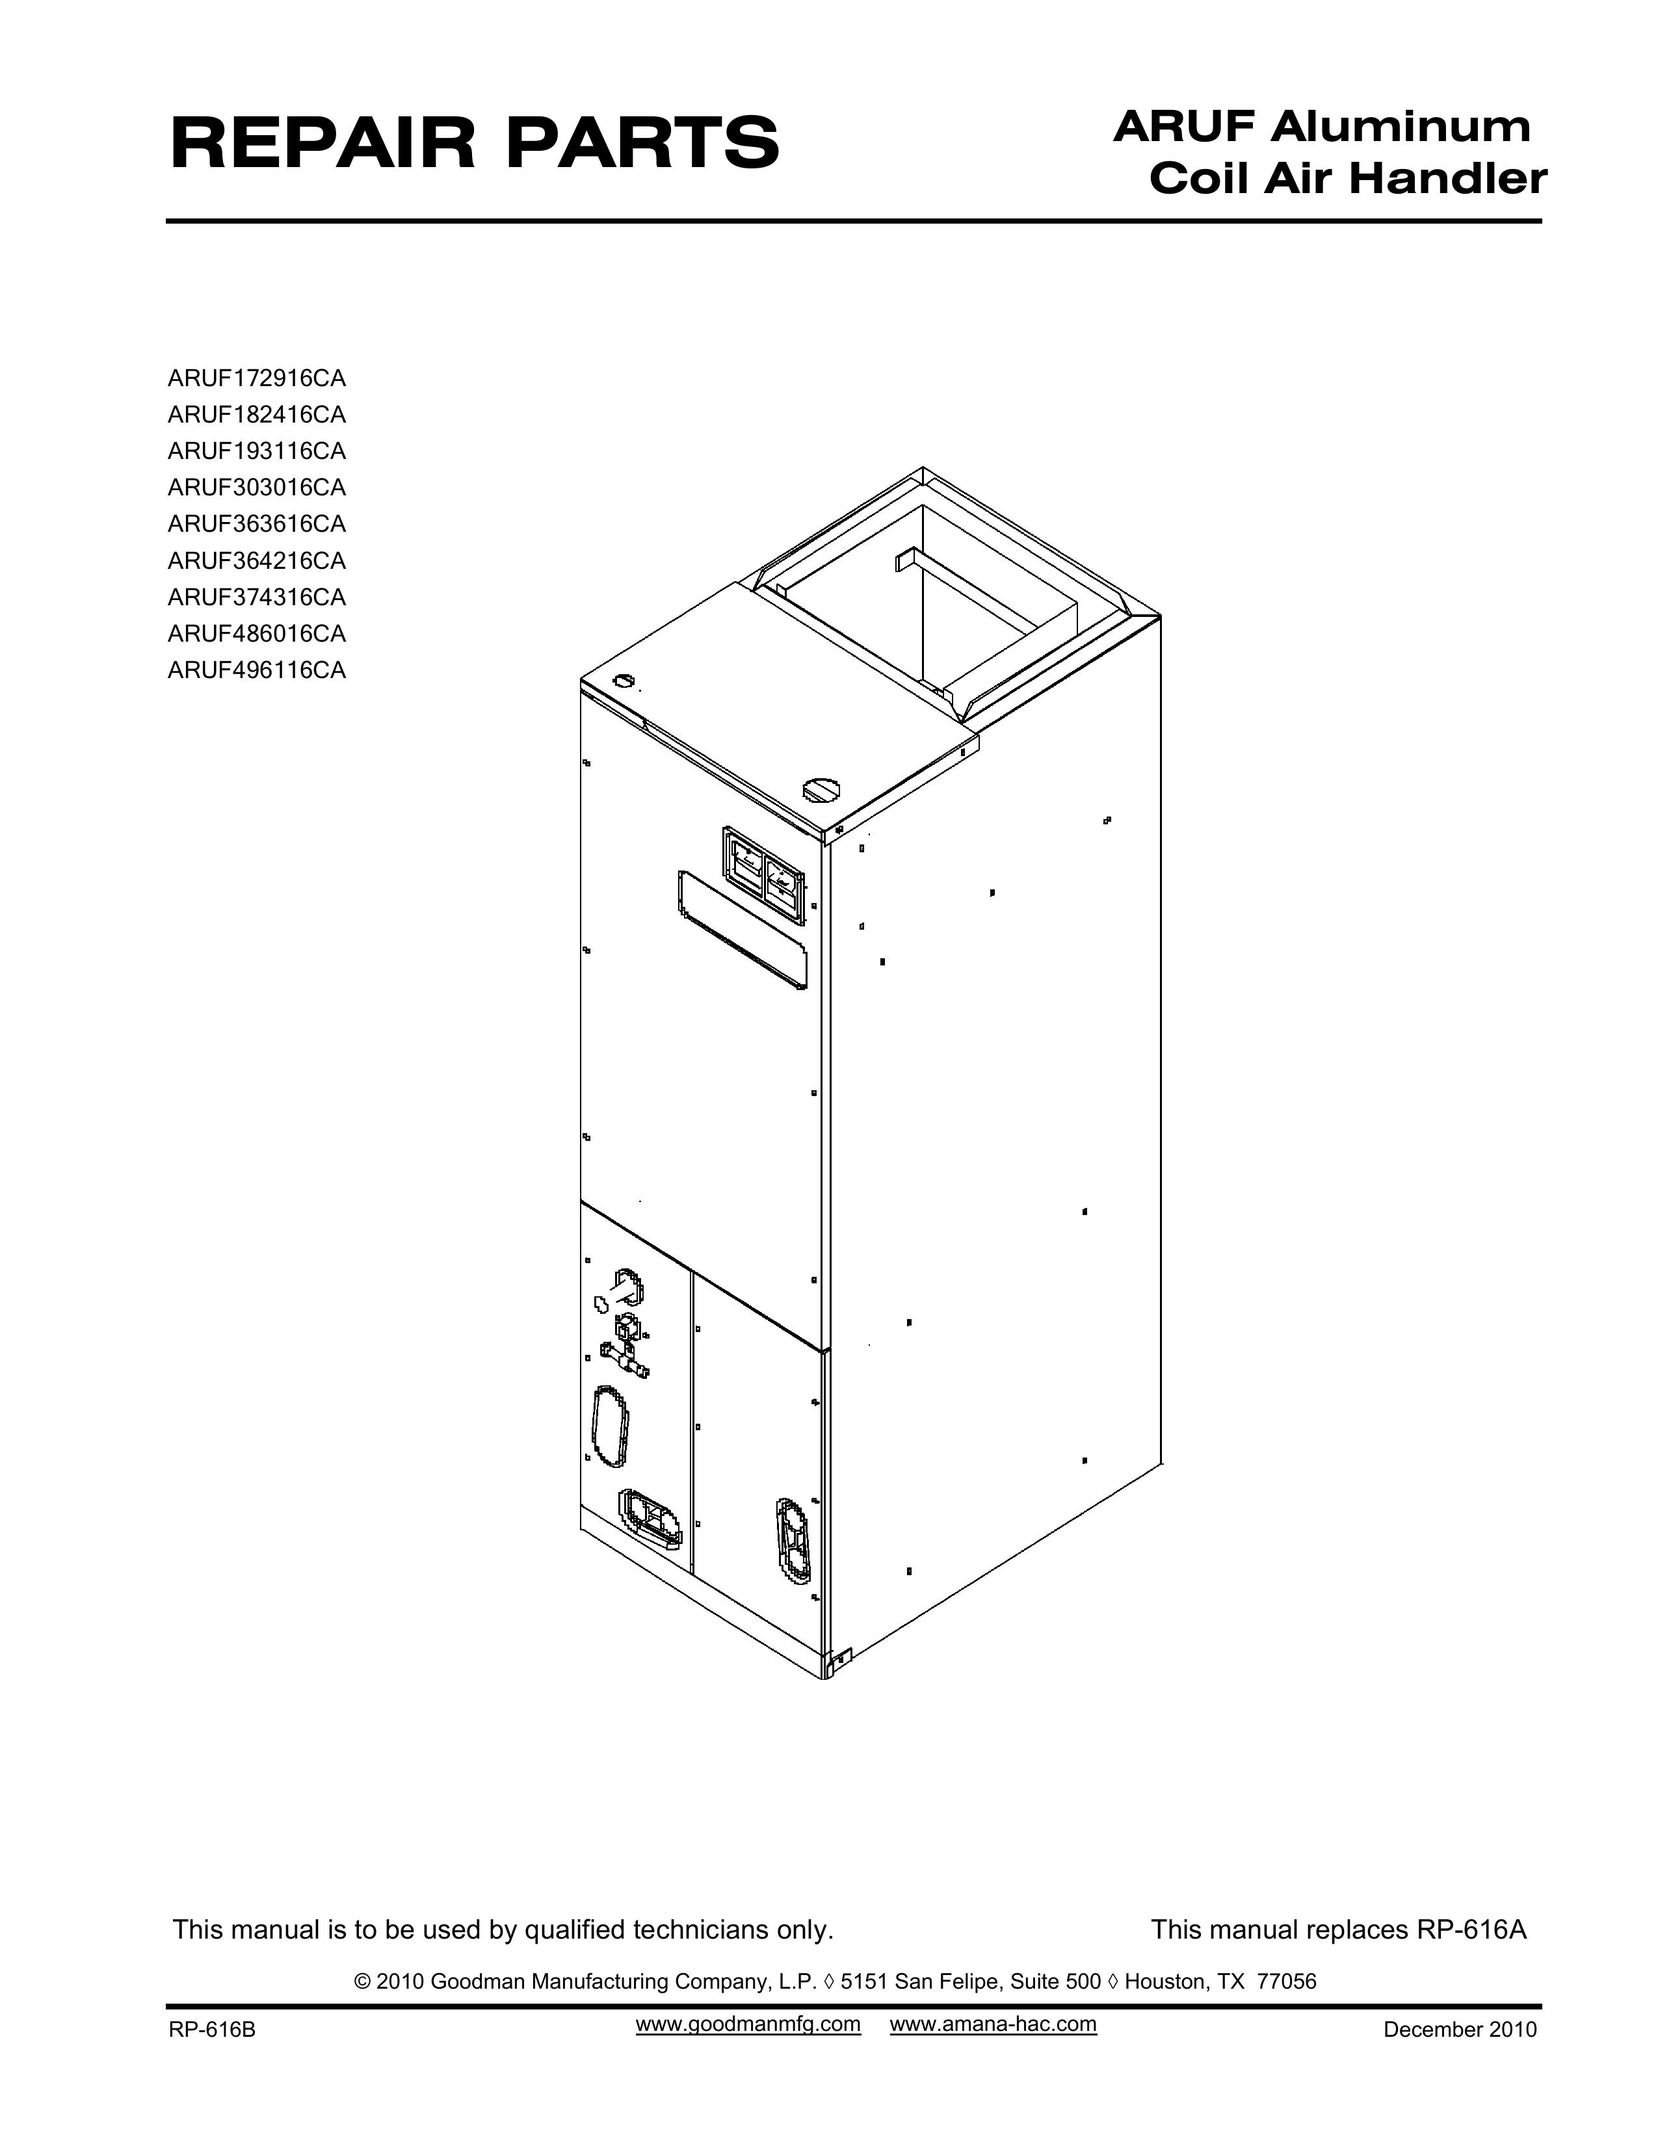 Goodman Mfg ARUF486016CA Air Conditioner User Manual